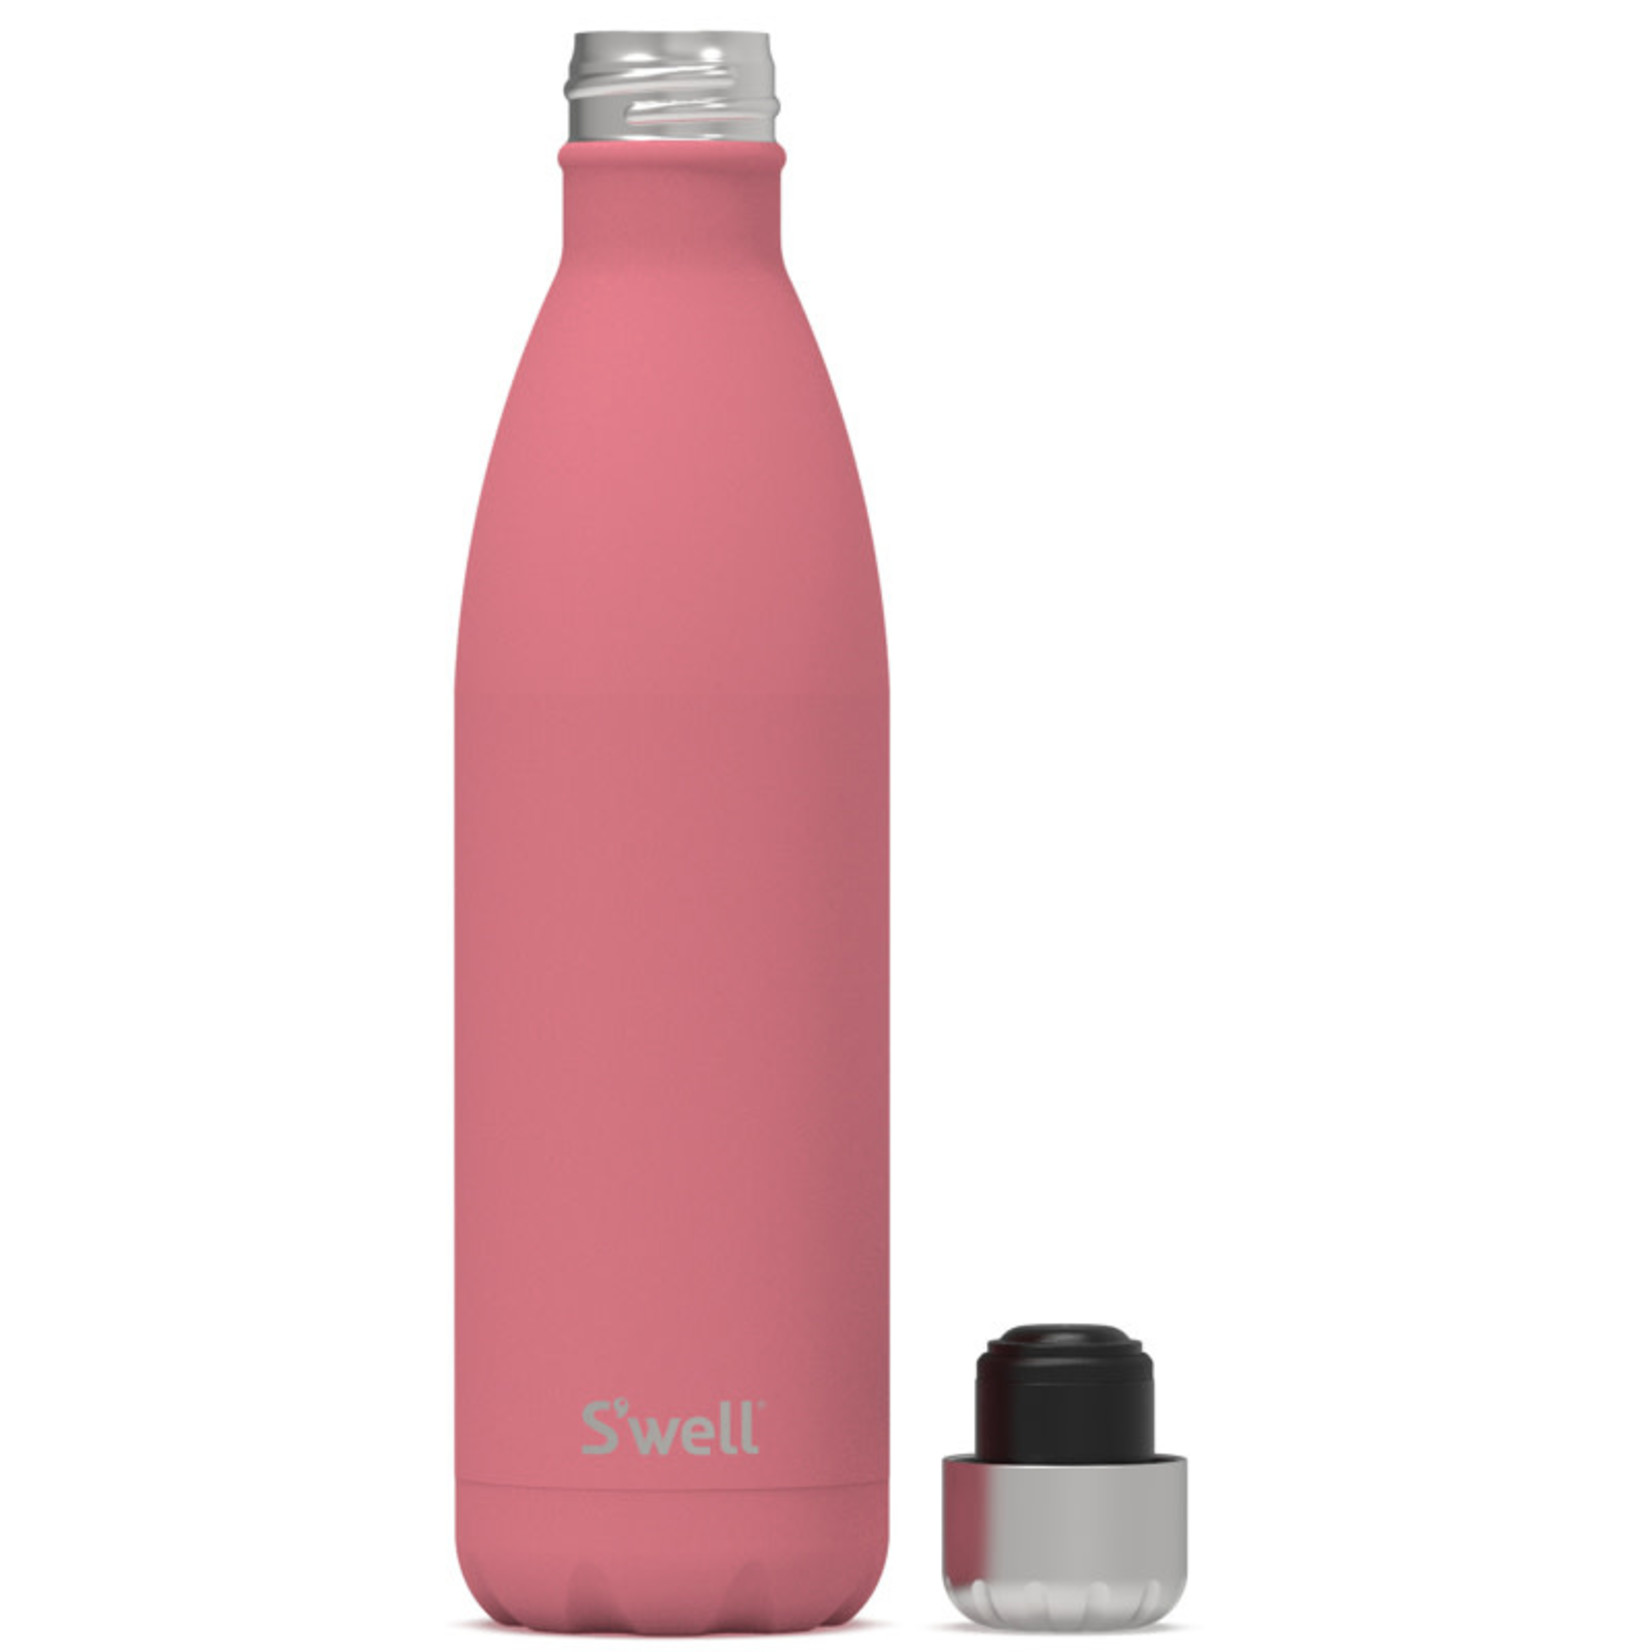 Coral Reef Bottle - 750 ml (25 oz)